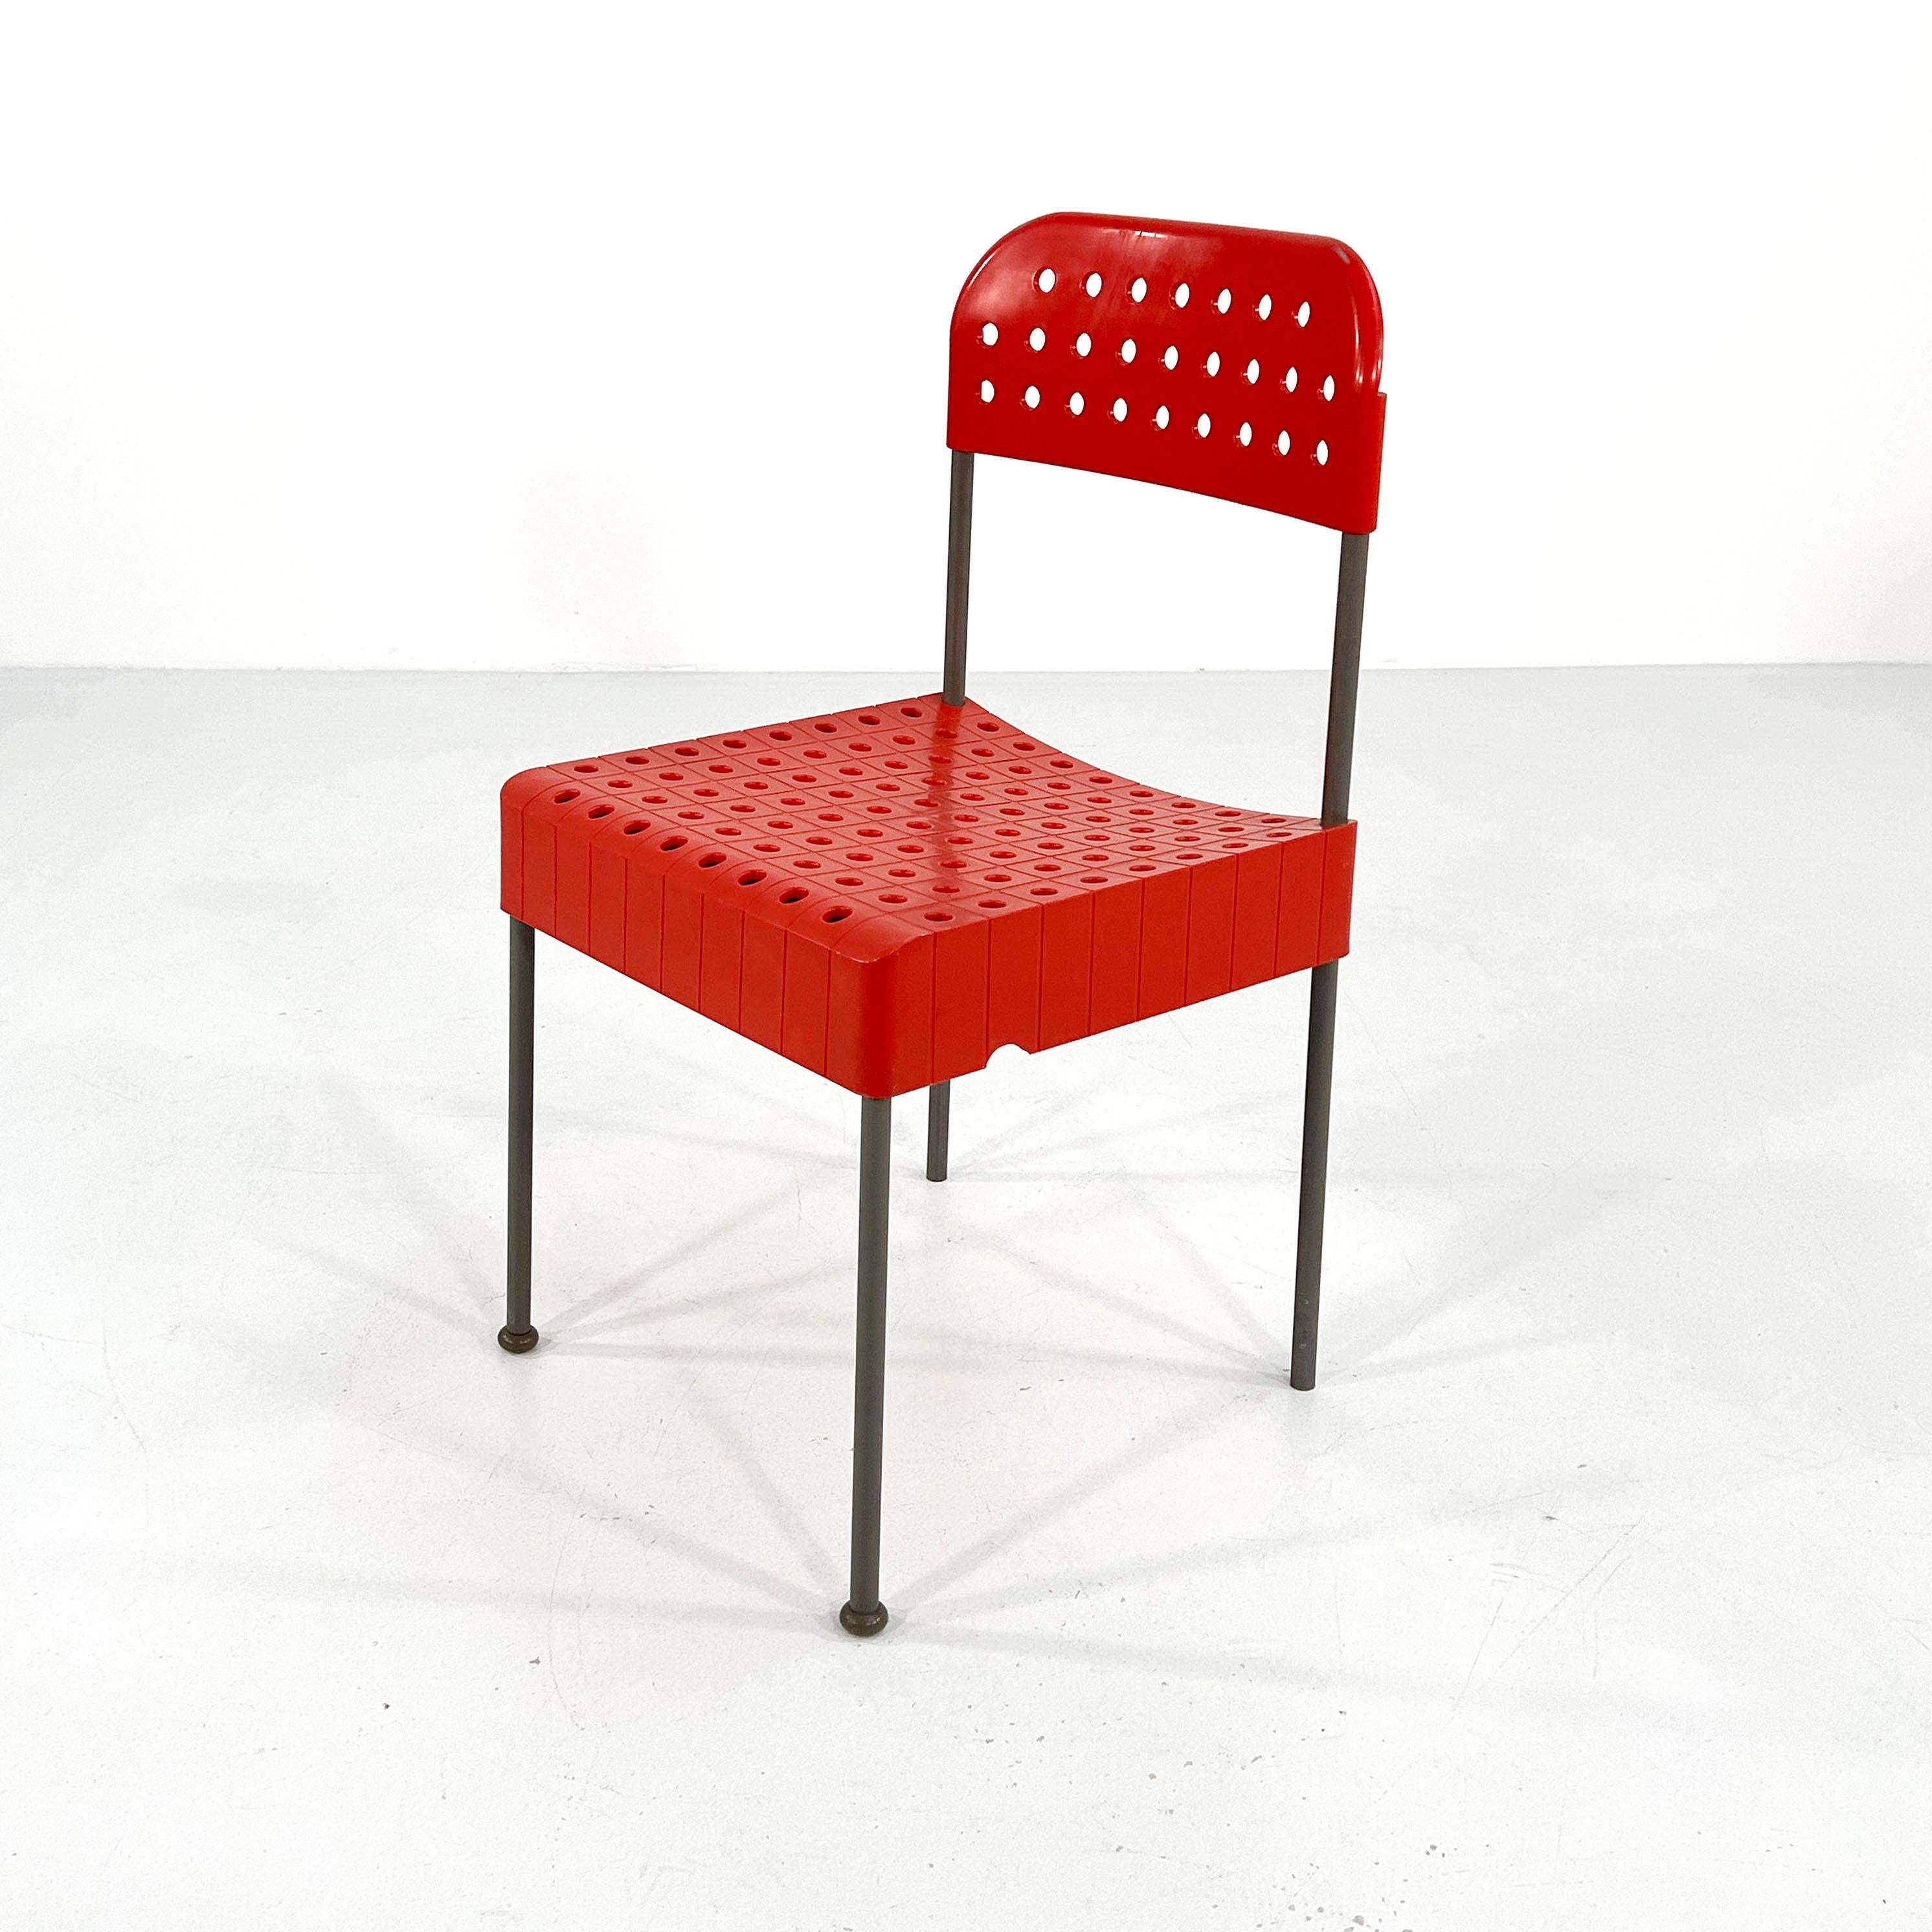 Designer - Enzo Mari
Producer - Anonima Castelli
Model - Box Chair
Design Period - Seventies
Measurements - width 45 cm x depth 44 cm x height 80 cm x seat height 44 cm
Materials - Metal, Plastic
Color - Red, Grey
Condition - Good 
Comments